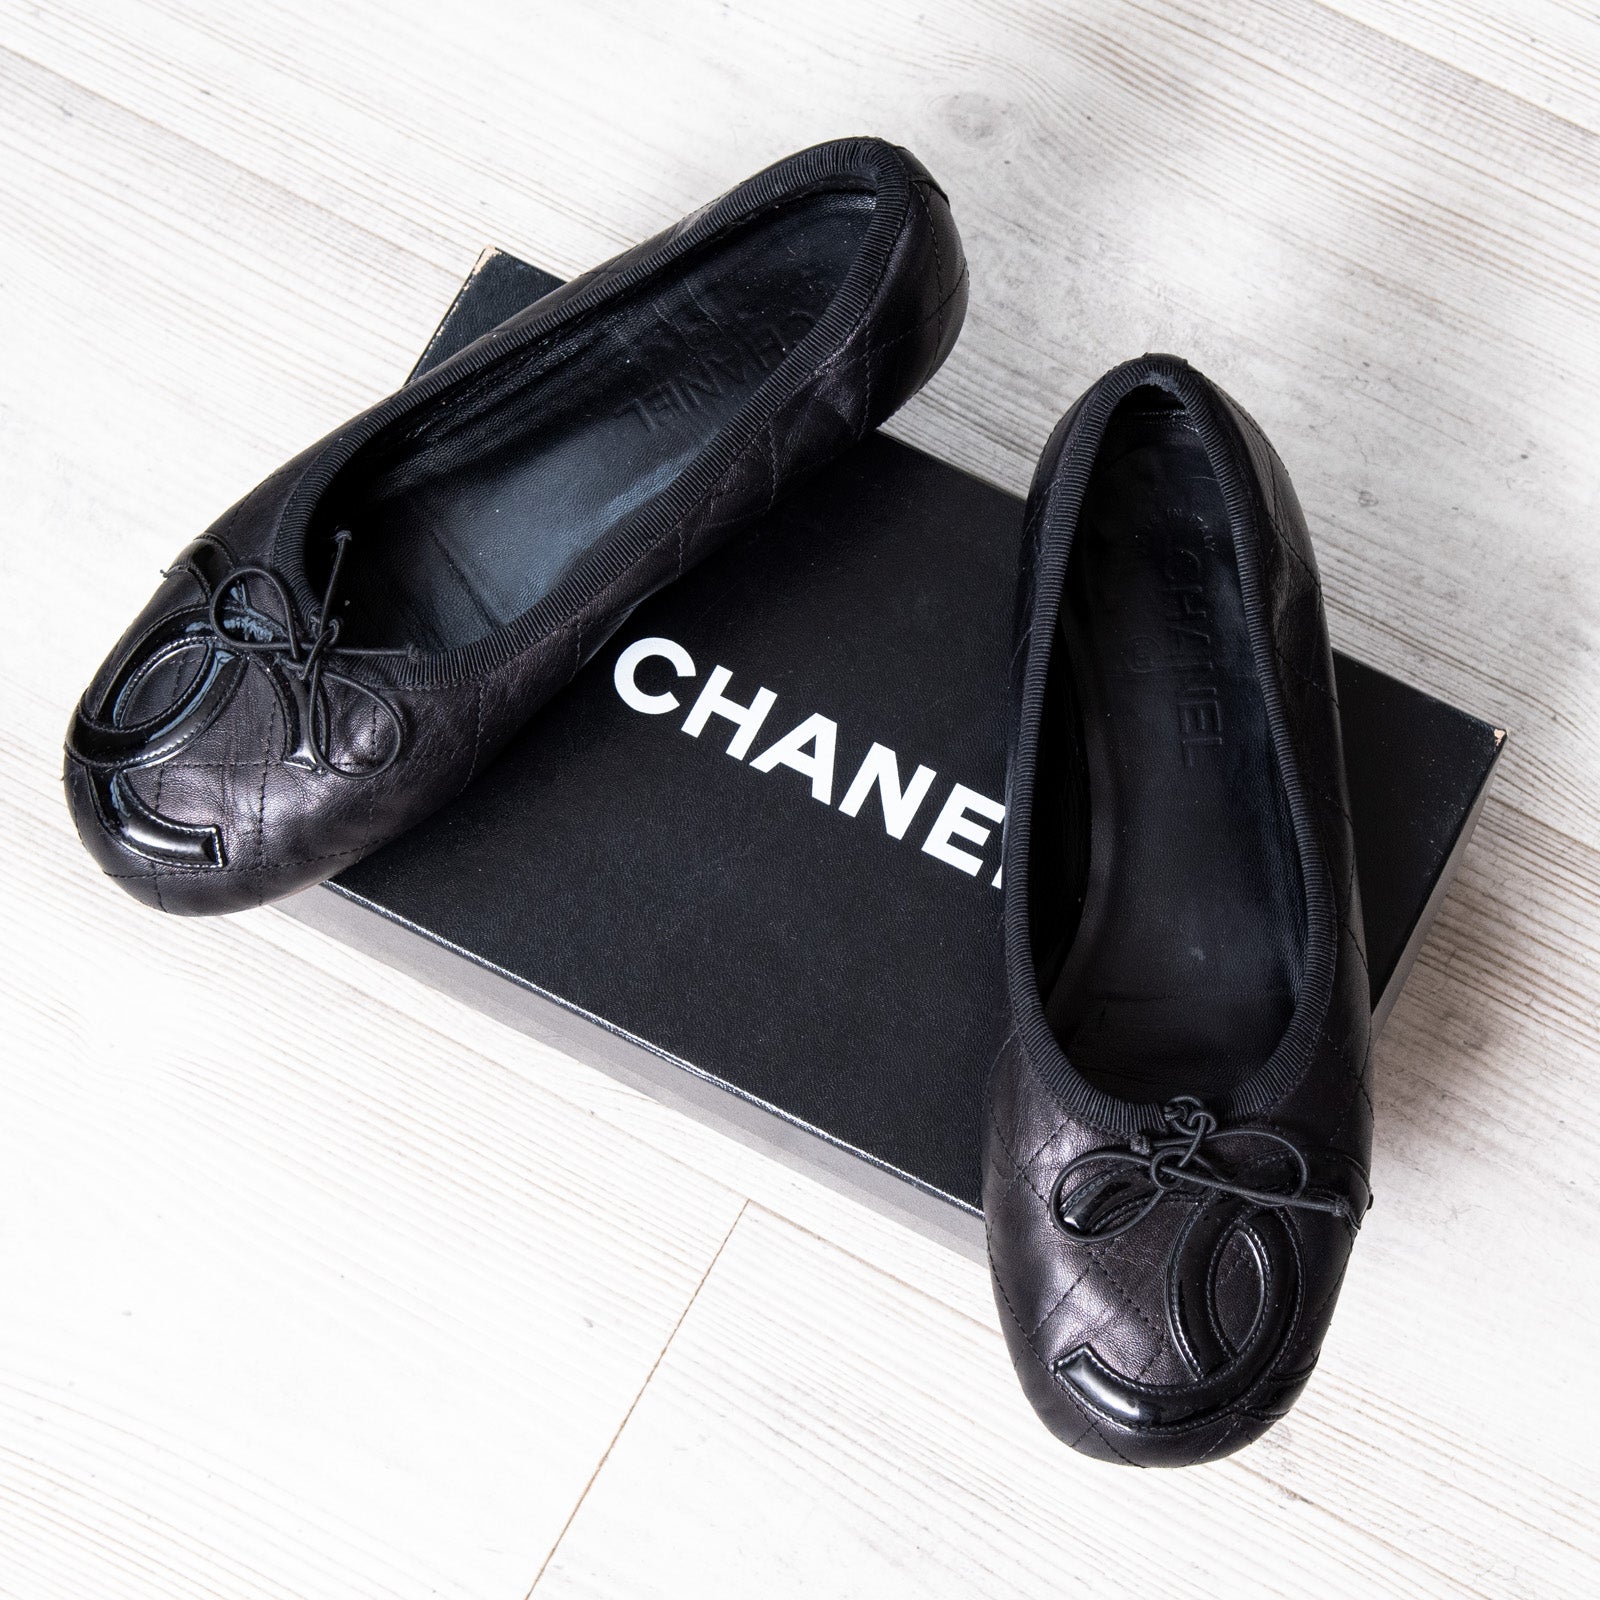 Chanel Black Leather Ballet Pumps - Image 2 of 6